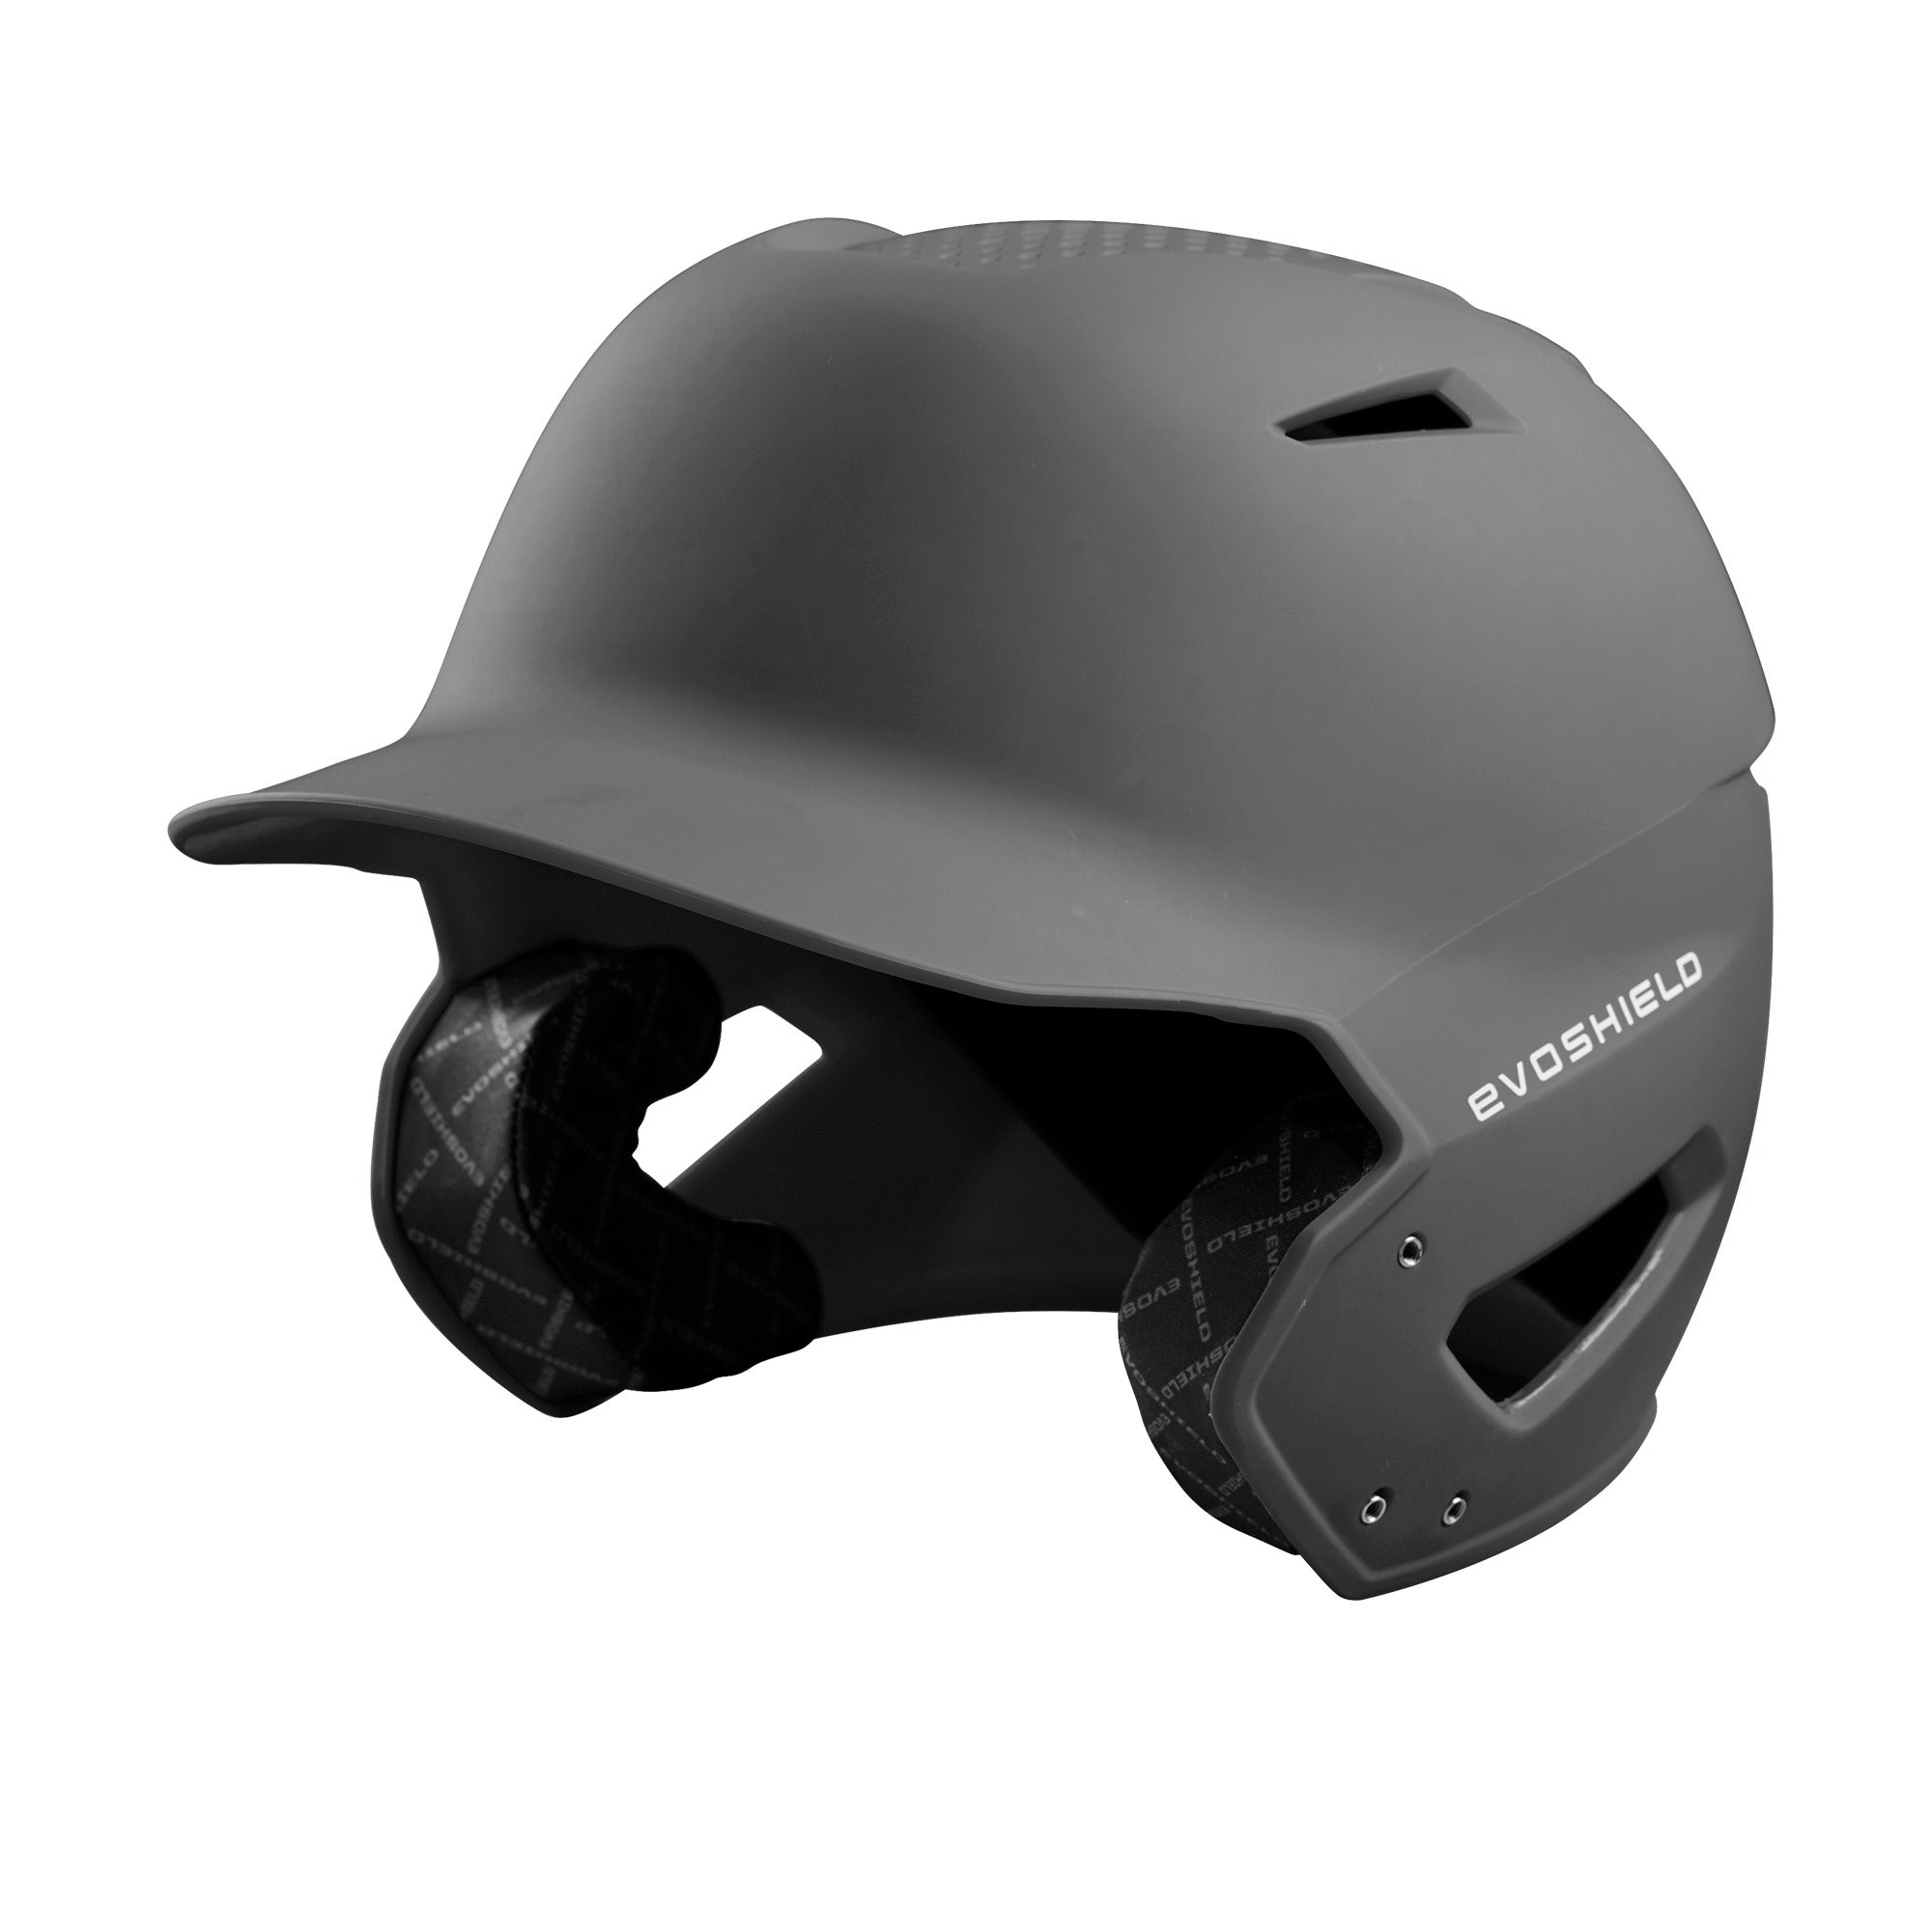 Evoshield XVT Batting Helmet - Matte Finish Charcoal